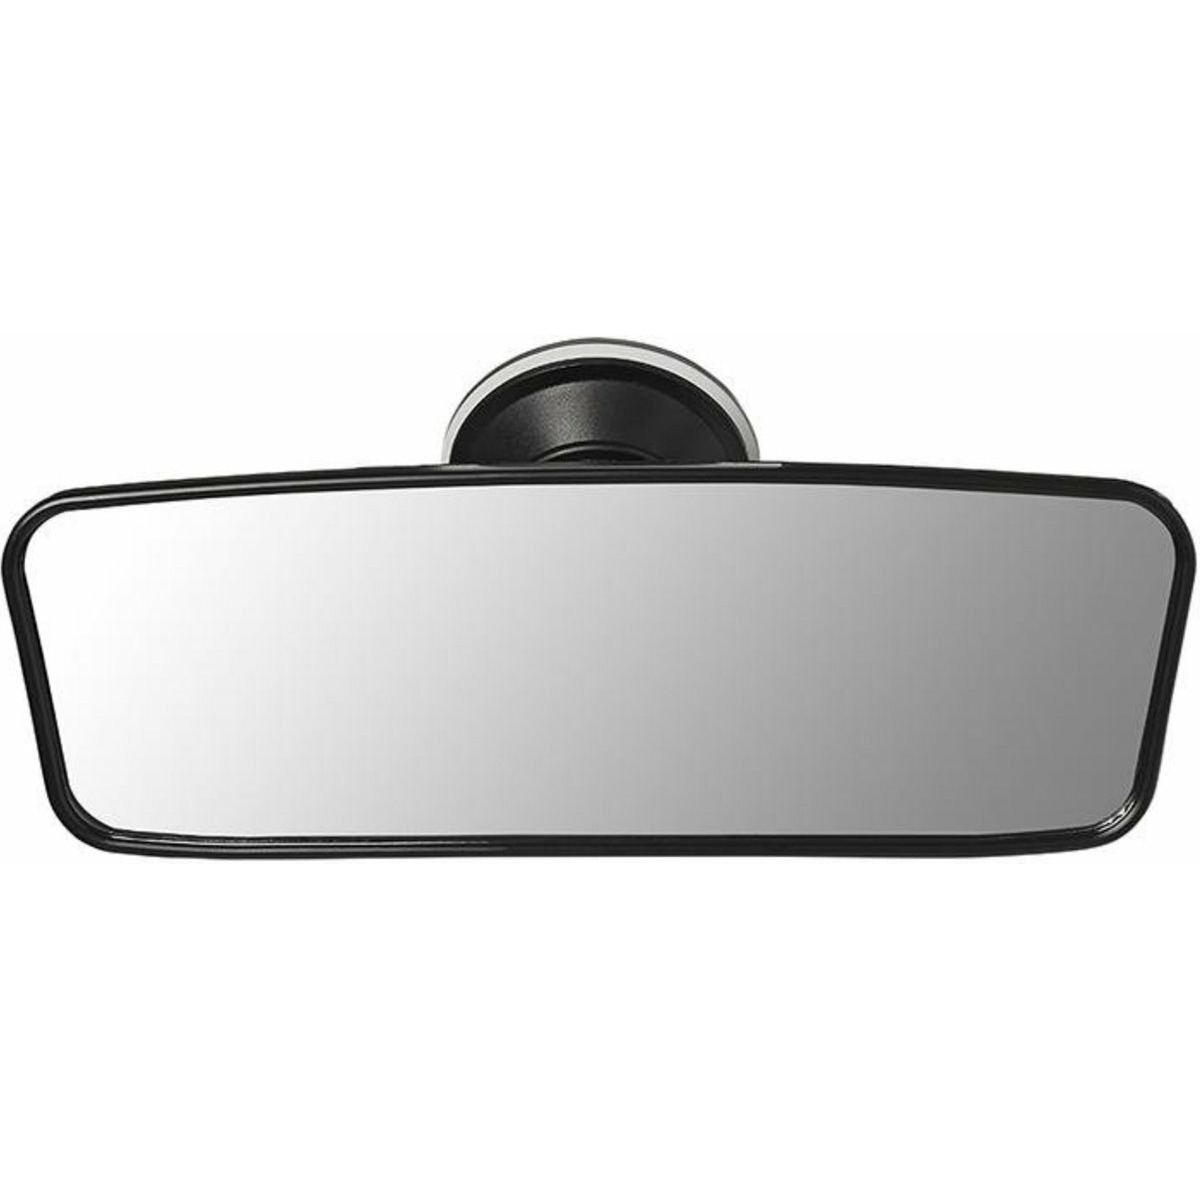 Auto achteruitkijkspiegel met zuignap universeel model 18 x 6 cm binnen spiegel